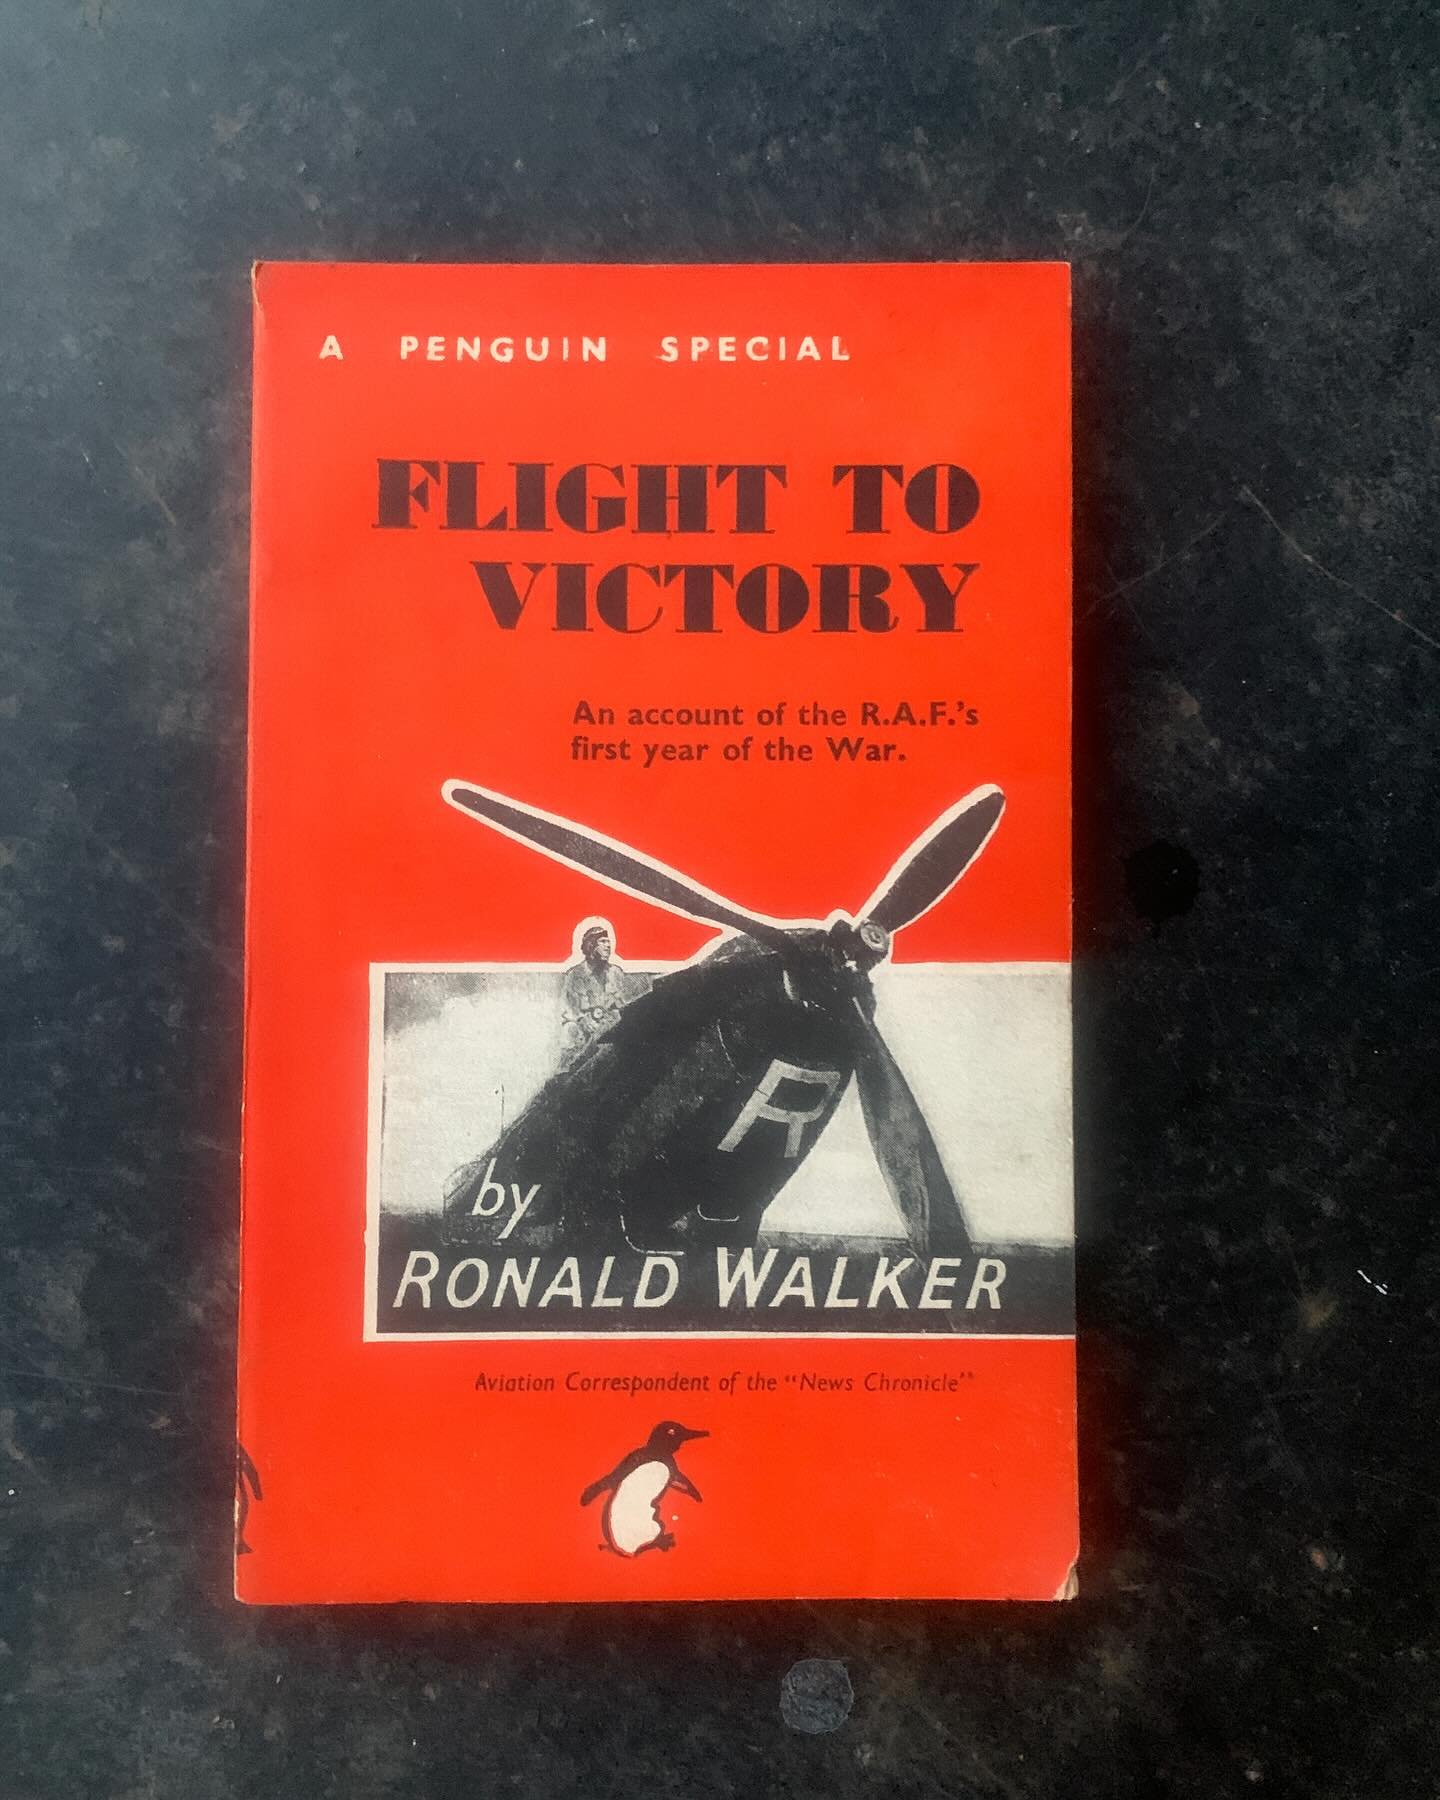 1940 Penguin Special, Flight to Victory. Fantastic condition, super rare piece of WW2 history.
#ww2
#battleofbritain 
#thefew
#raf
#militaria
#aviation
#ww2aviation